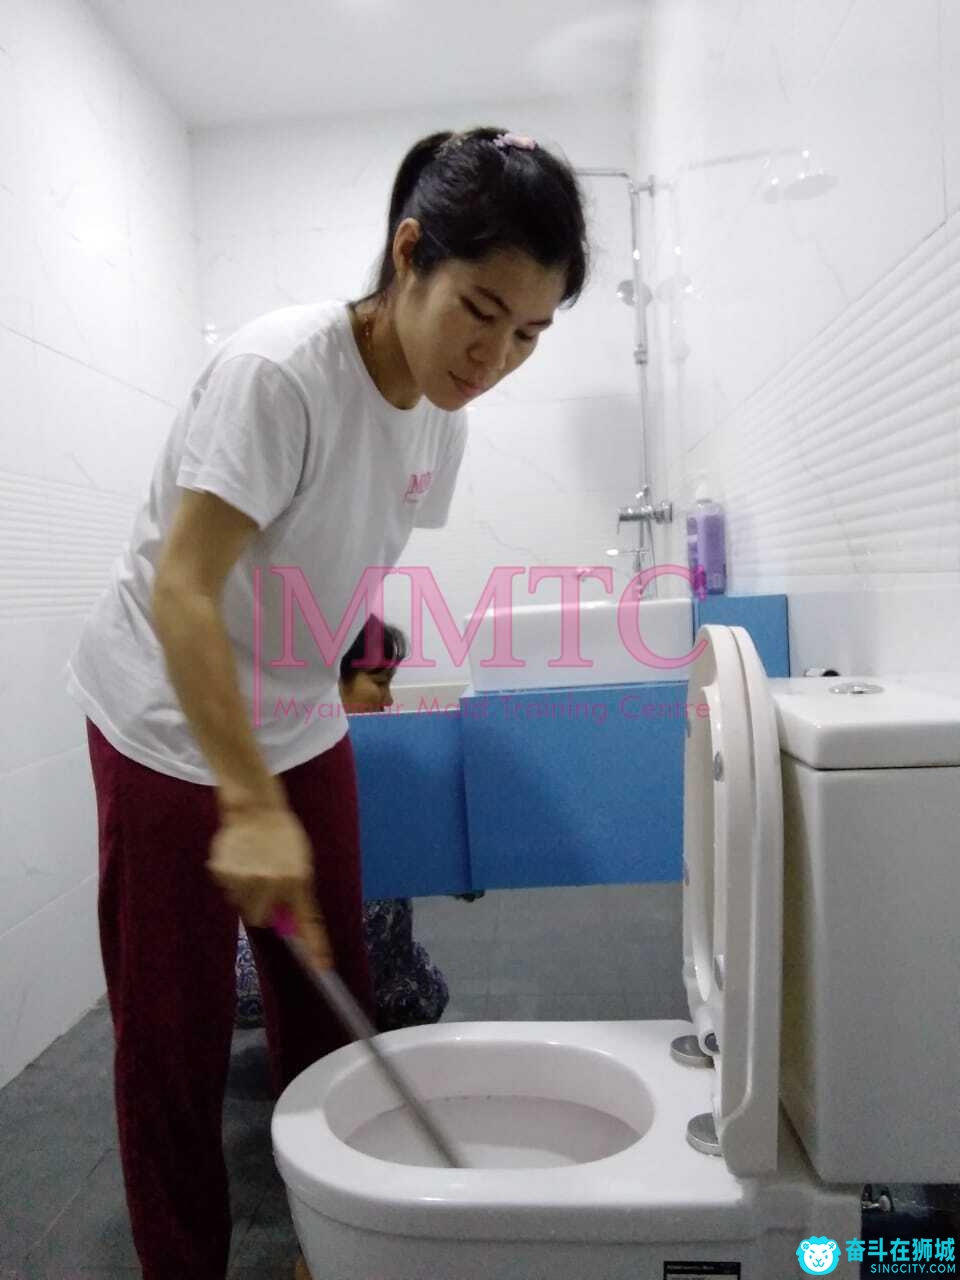 cleaning toilet bowl.jpg